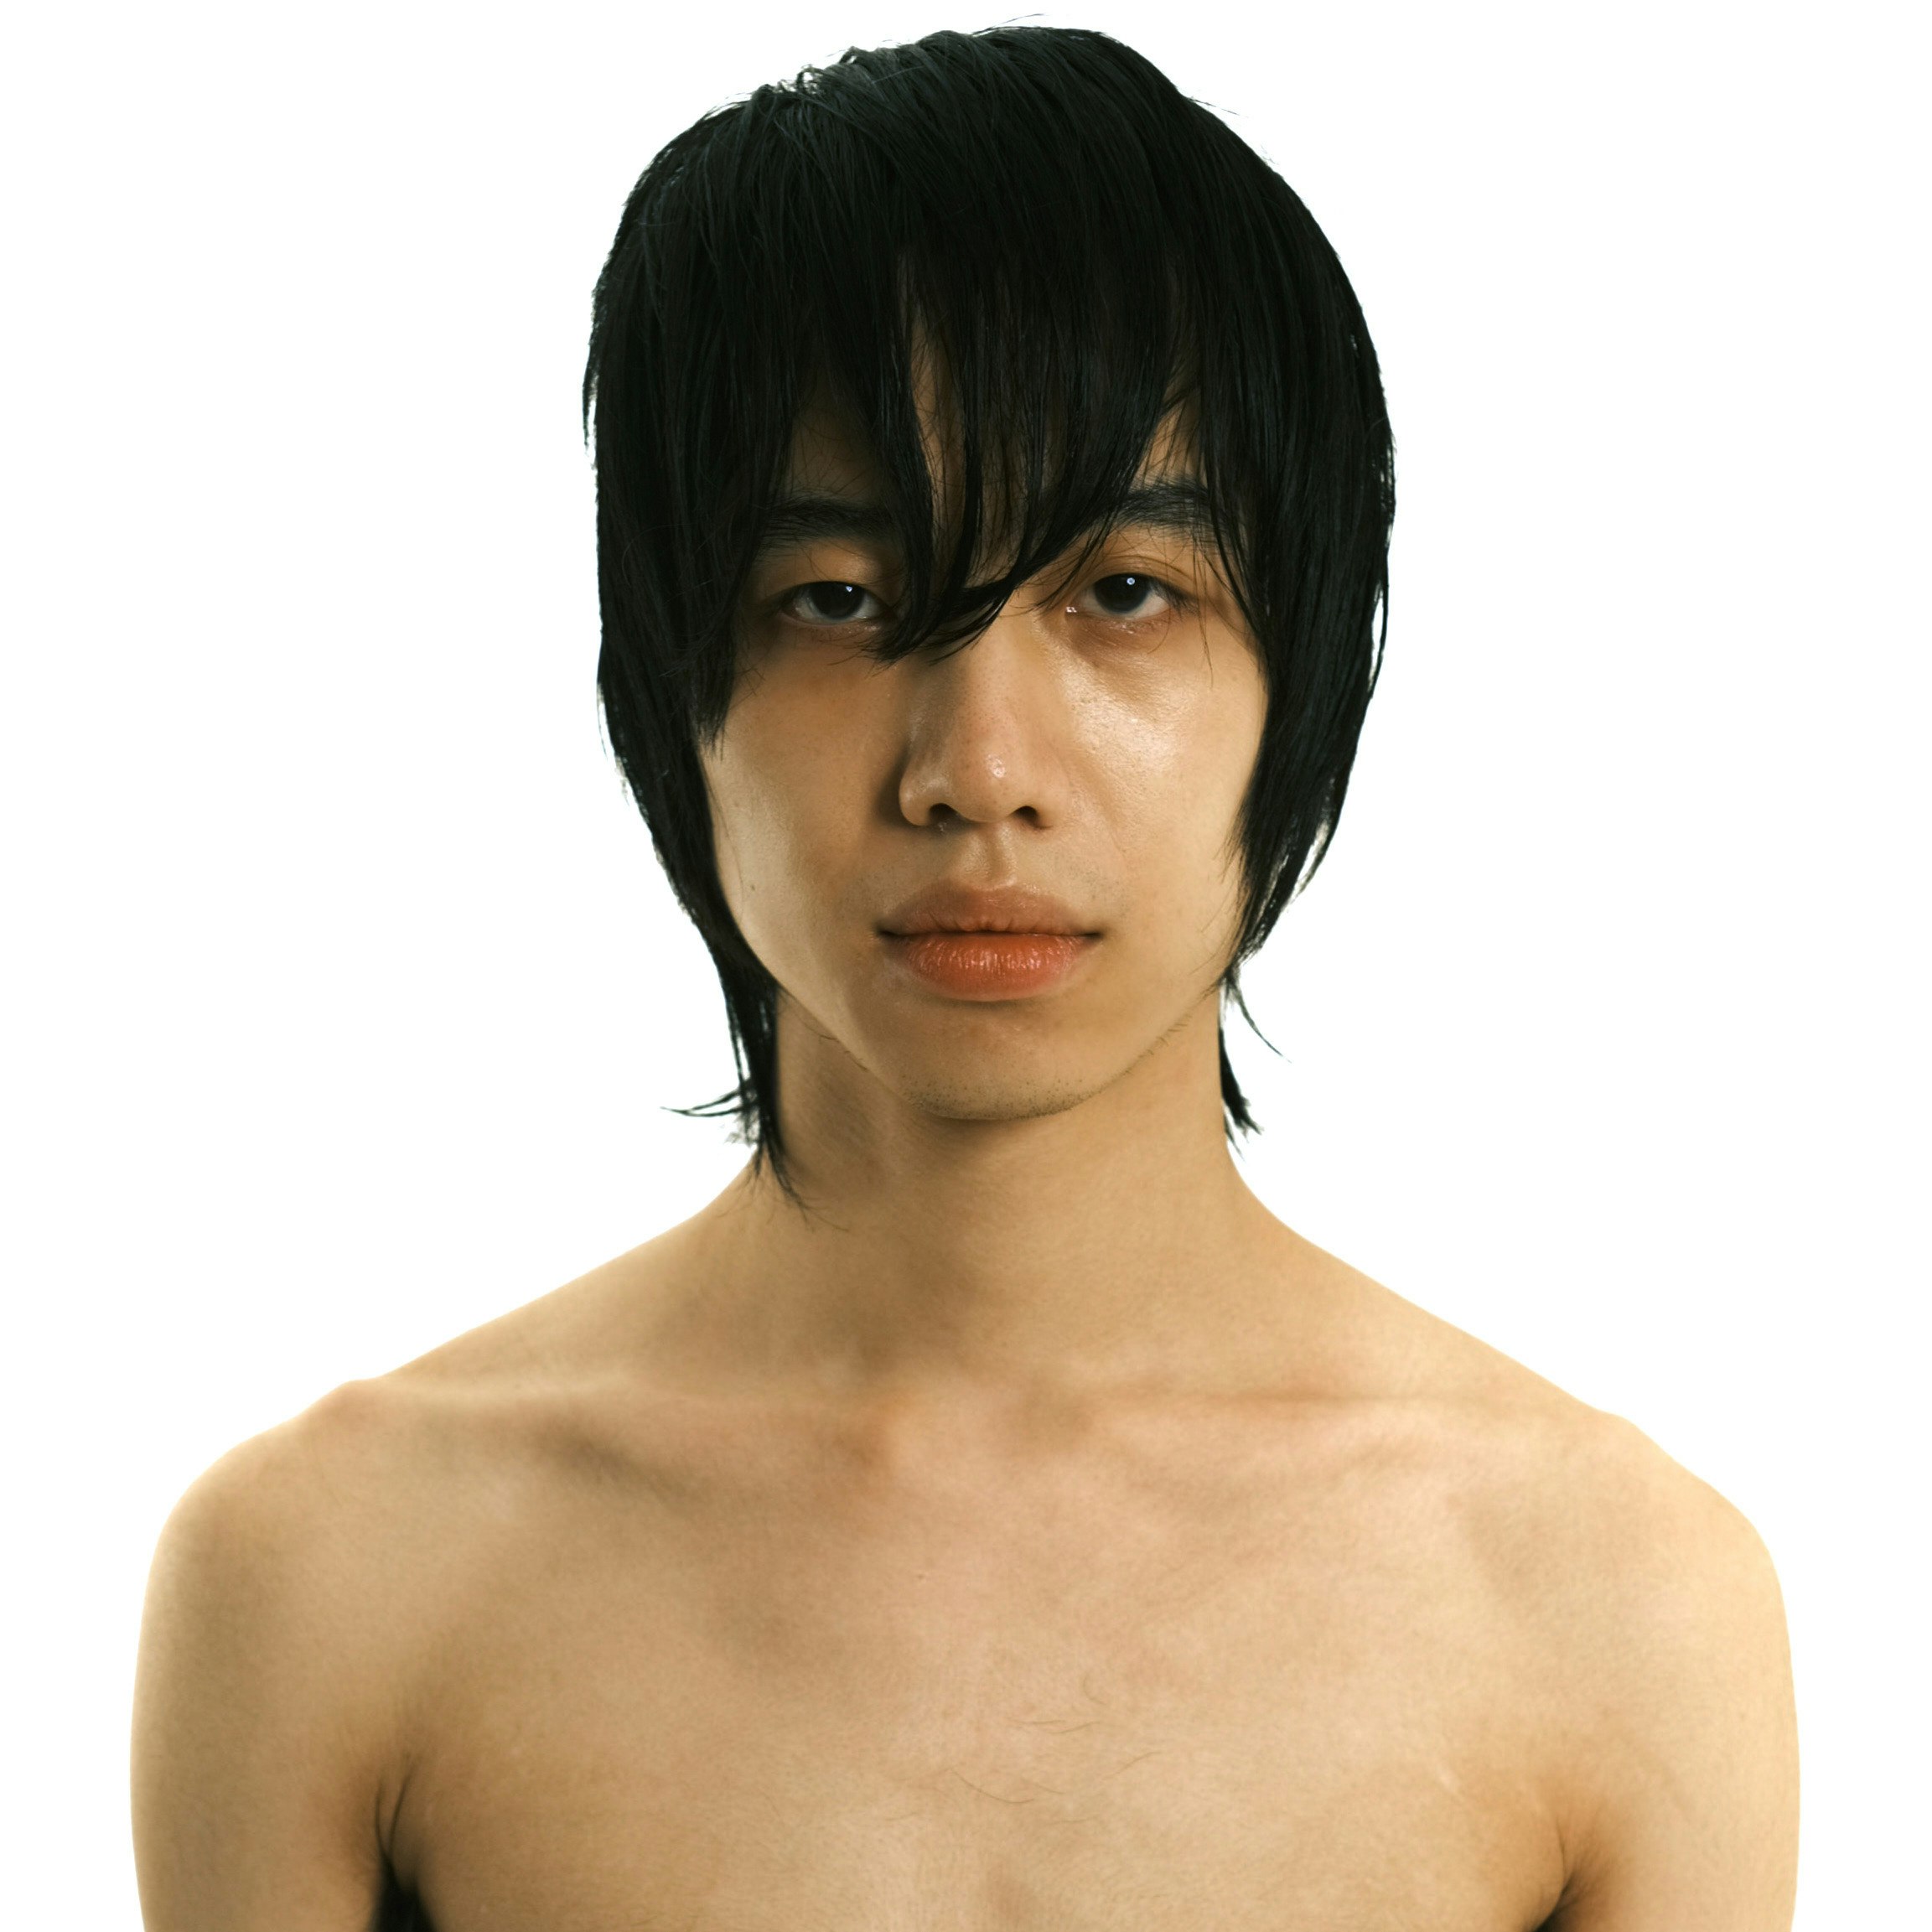 An image of Yifan Li